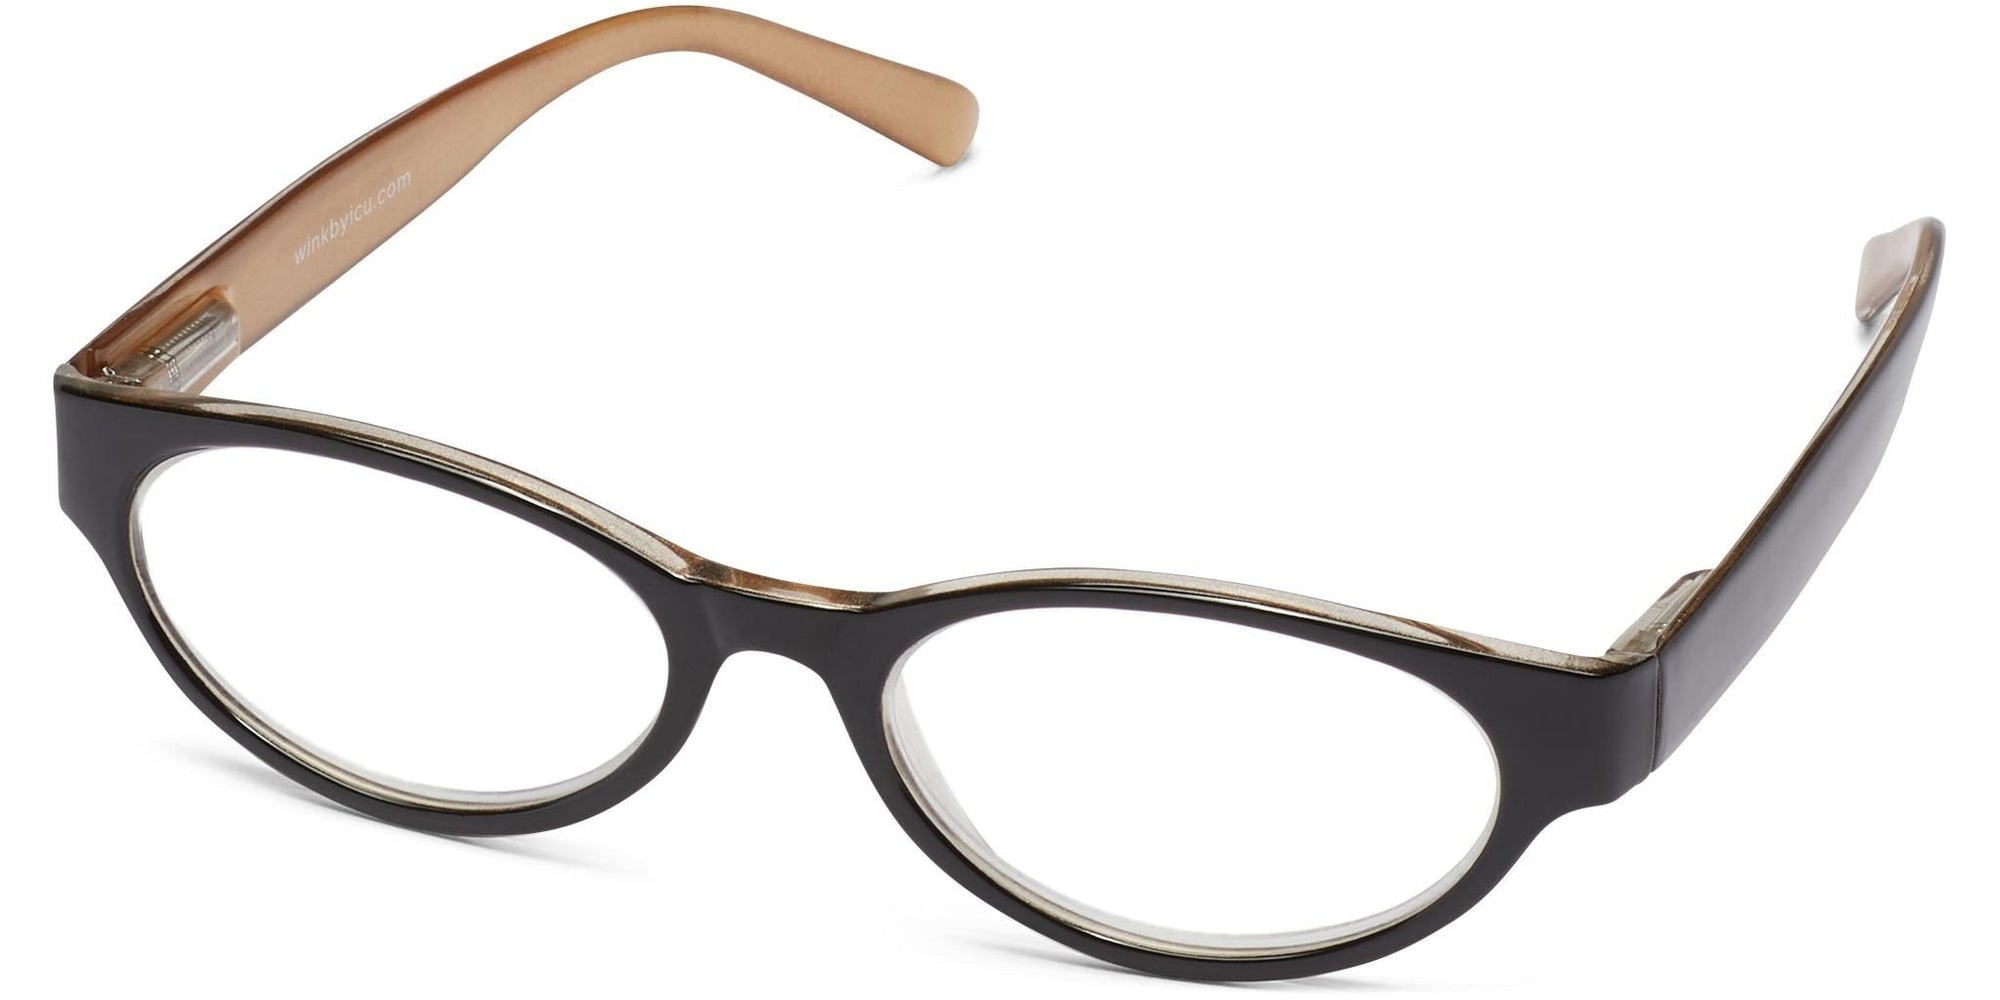 Louisville Oval Prescription Glasses - Black, Women's Eyeglasses